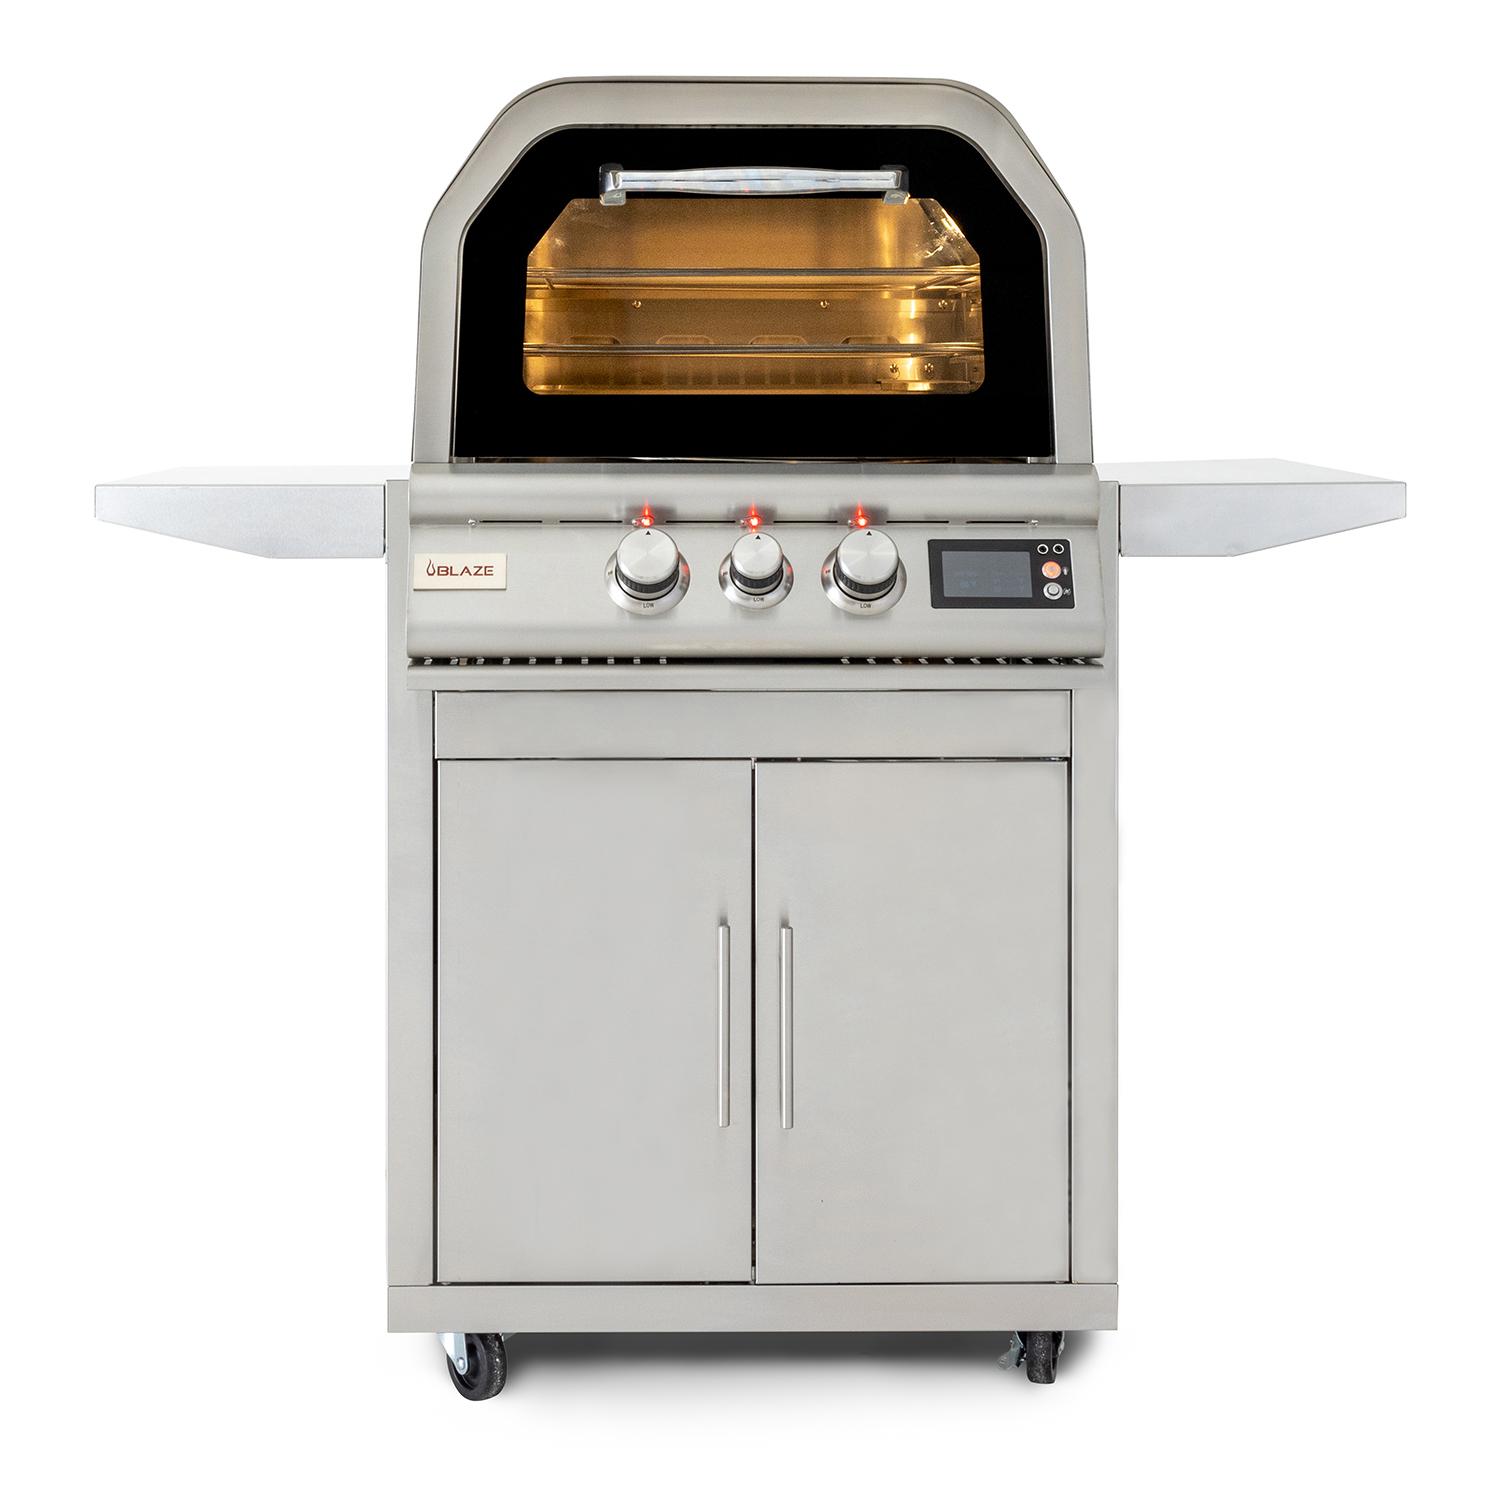 Blaze Grills BLZ26PZOVNLP Blaze 26-Inch Gas Outdoor Pizza Oven With Rotisserie, With Fuel Type - Propane